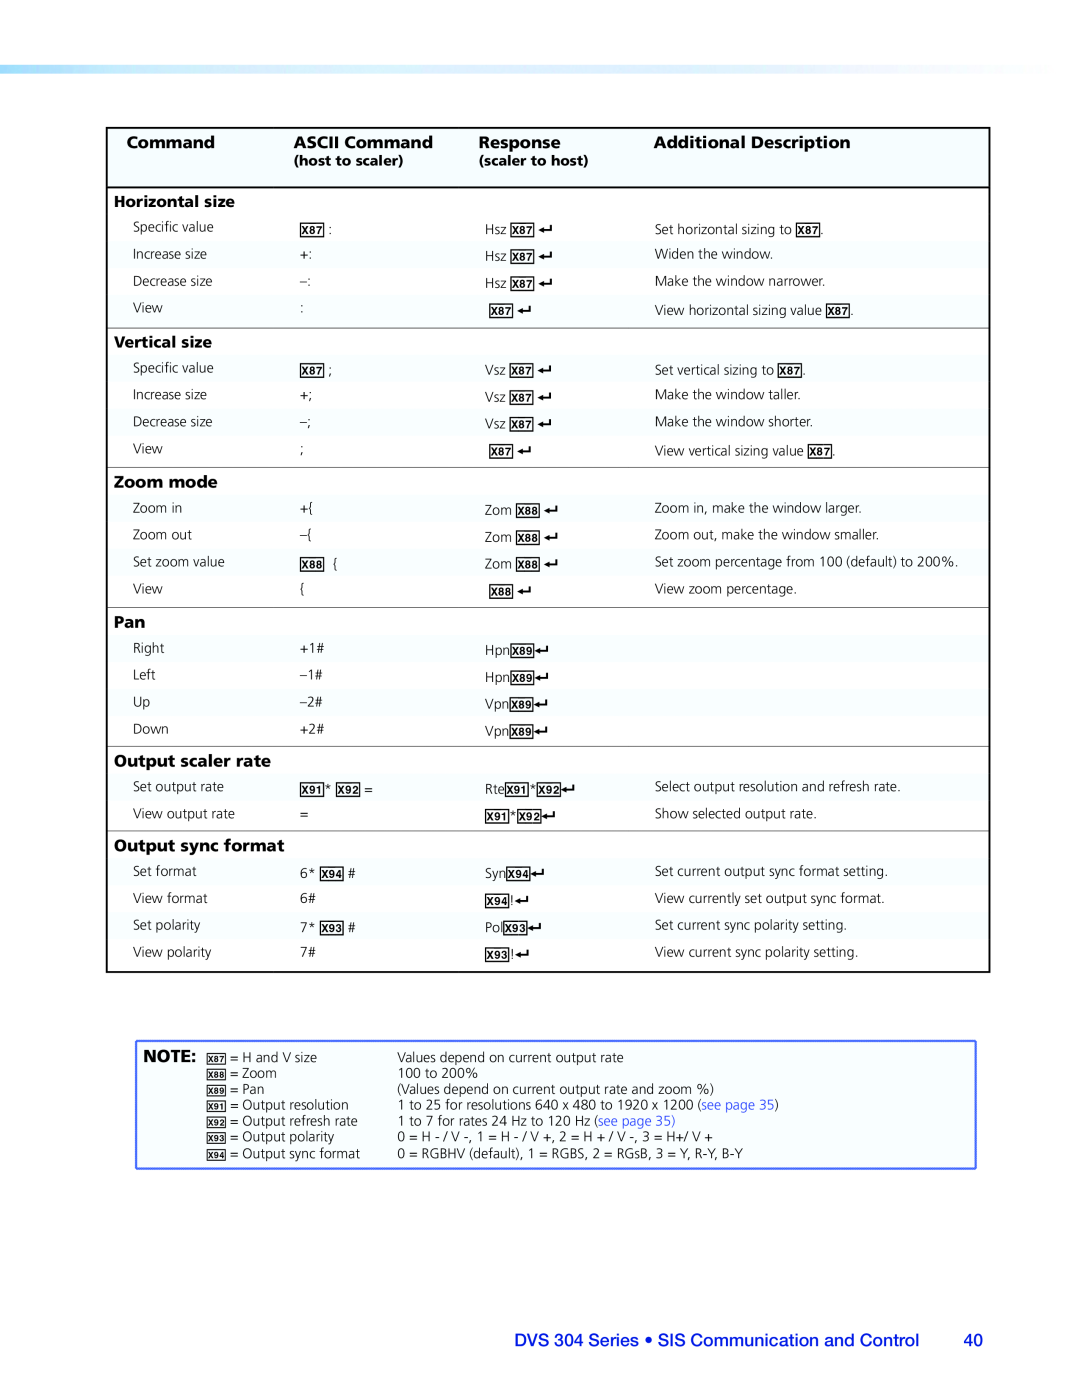 Extron electronic DVS 304 manual ASCII Command, Response, Additional Description, Zoom mode, Output scaler rate 